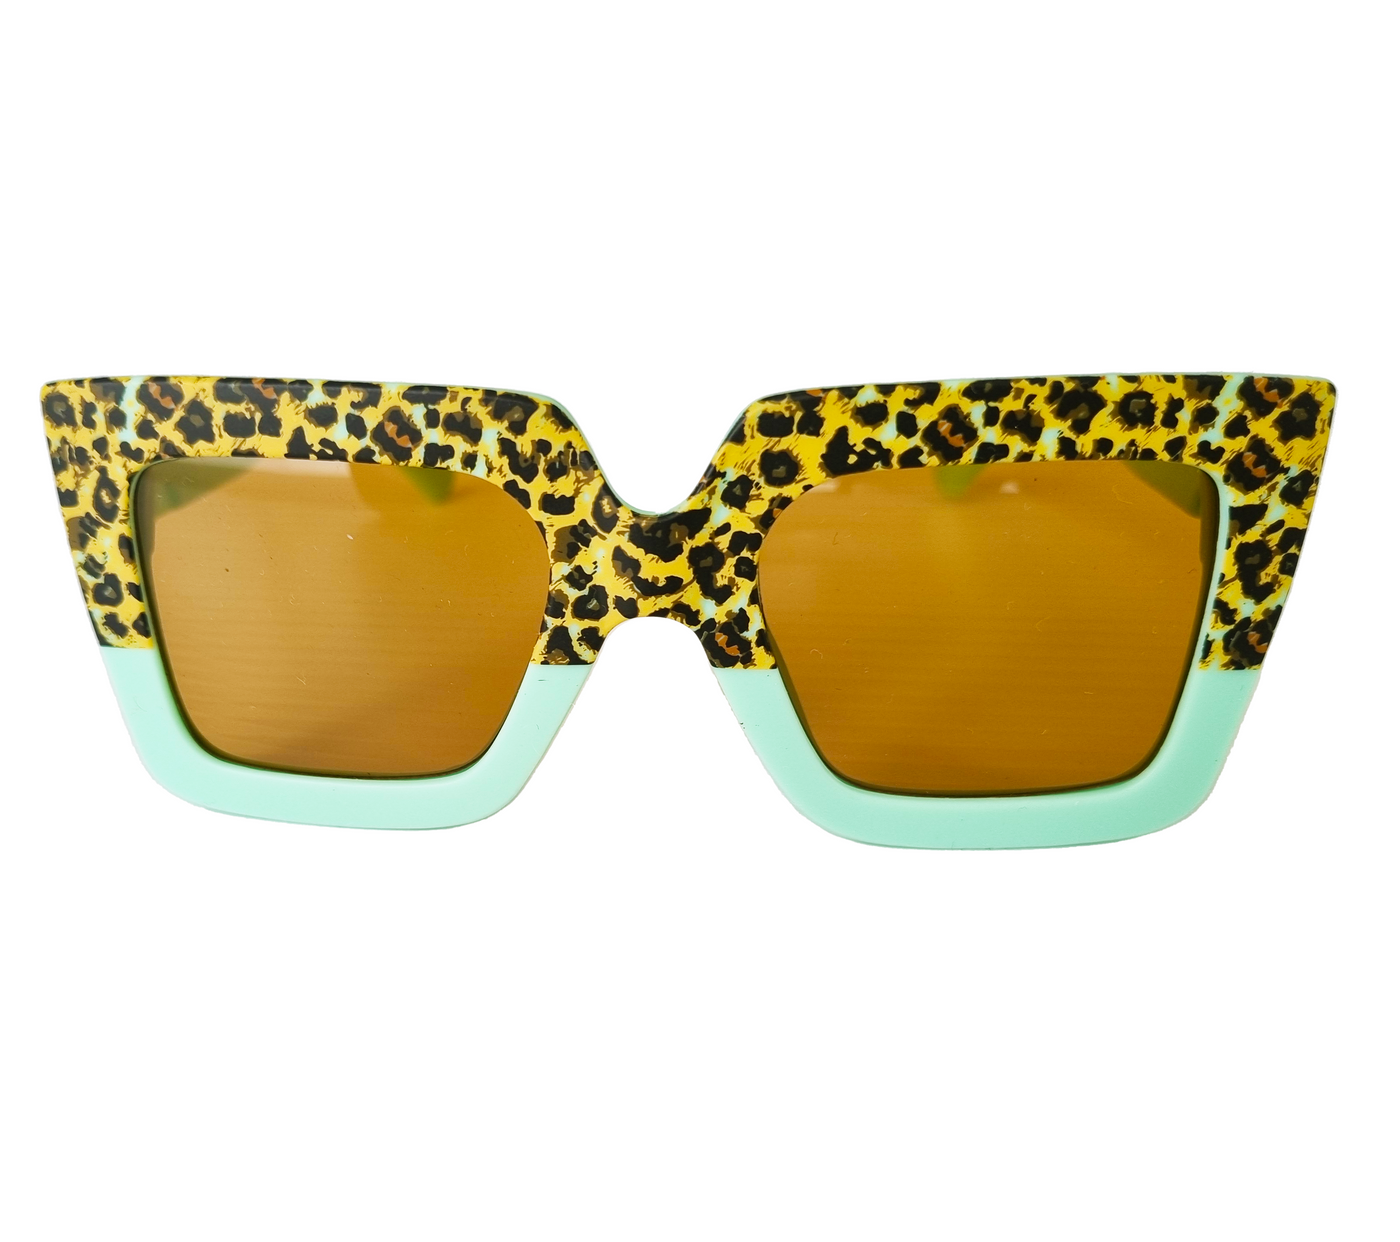 Dog Fashion Sun Glasses - Lime Leopard